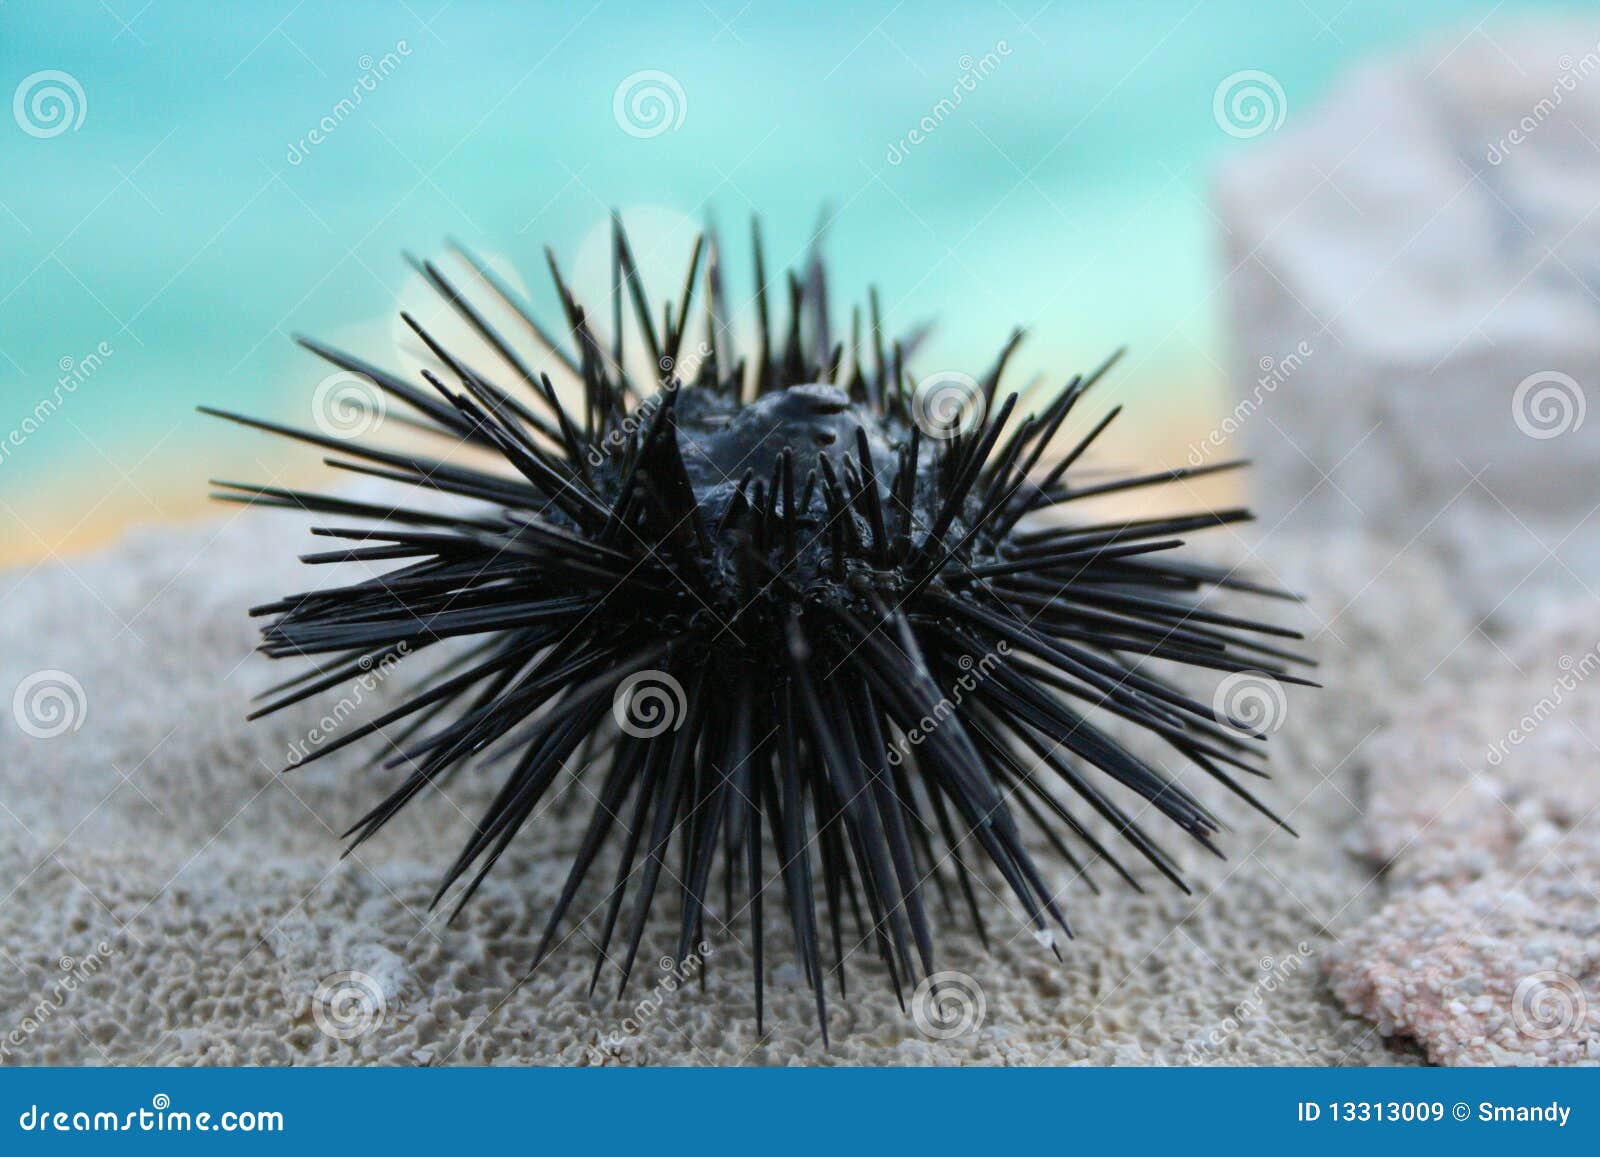 sea urchin close-up in greece